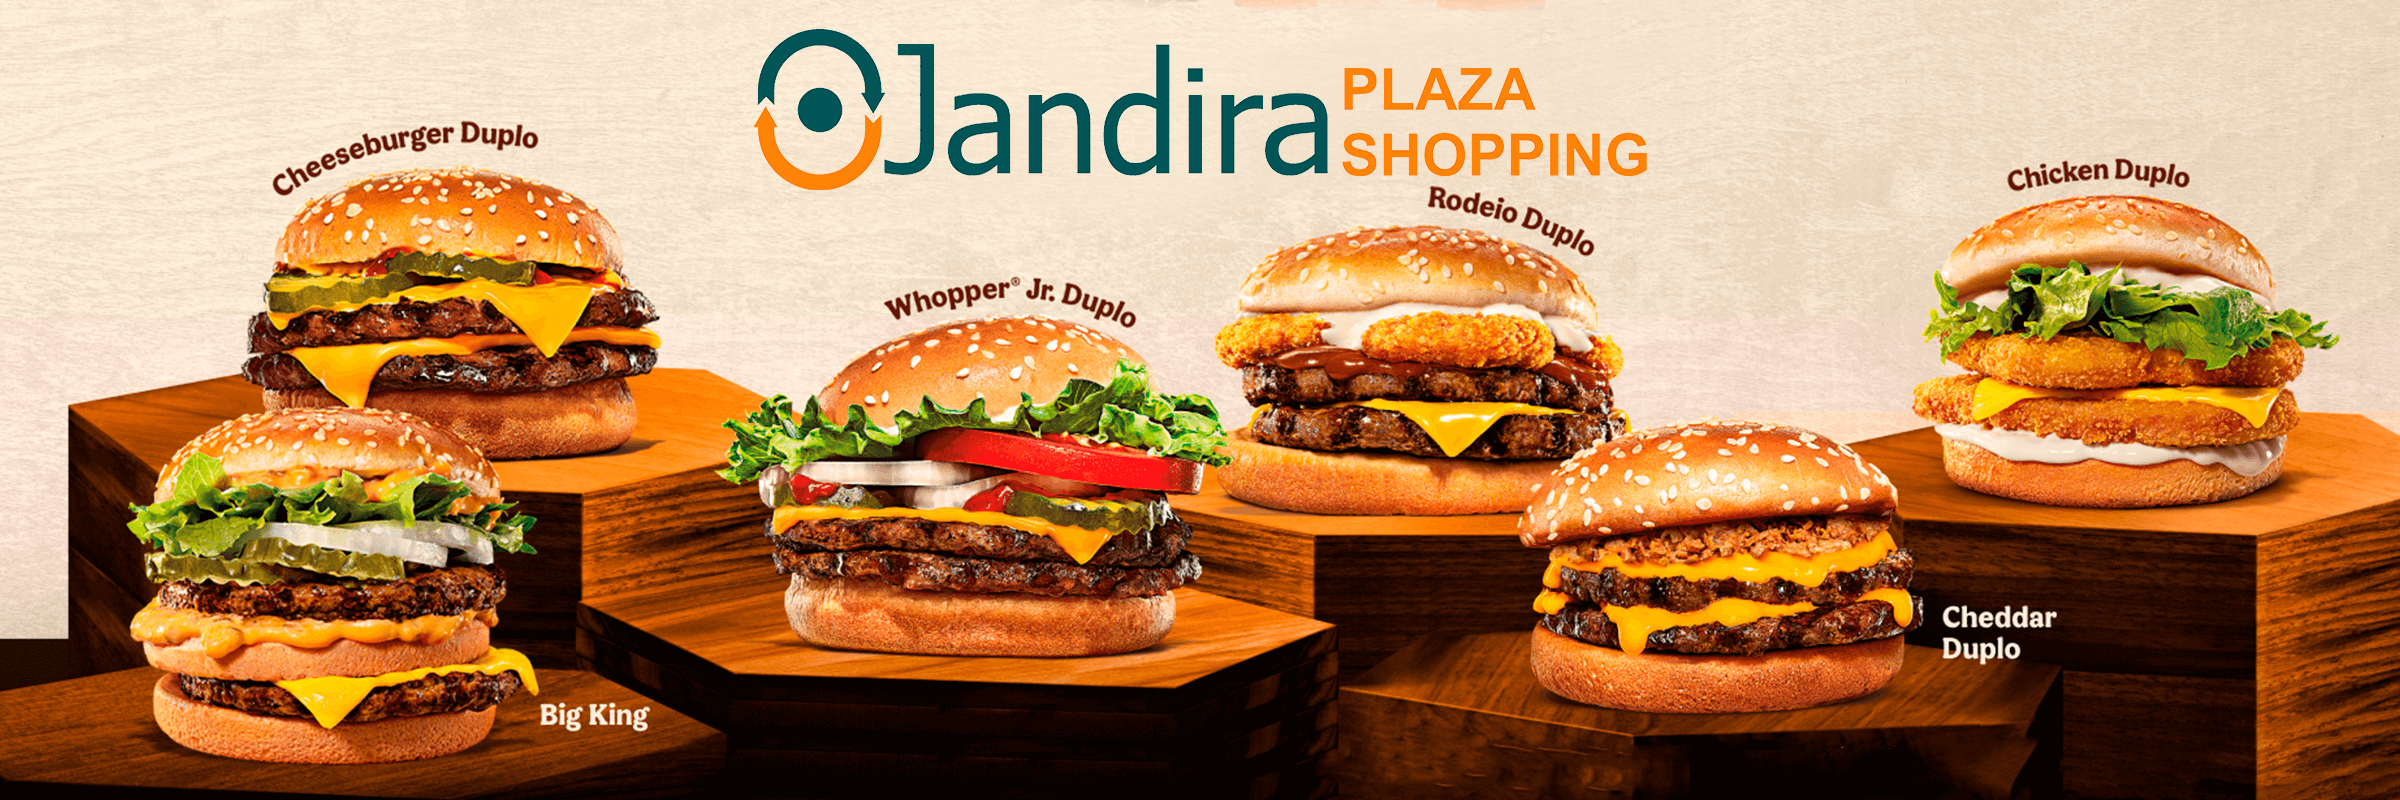 Burger King é no Jandira Plaza Shopping!